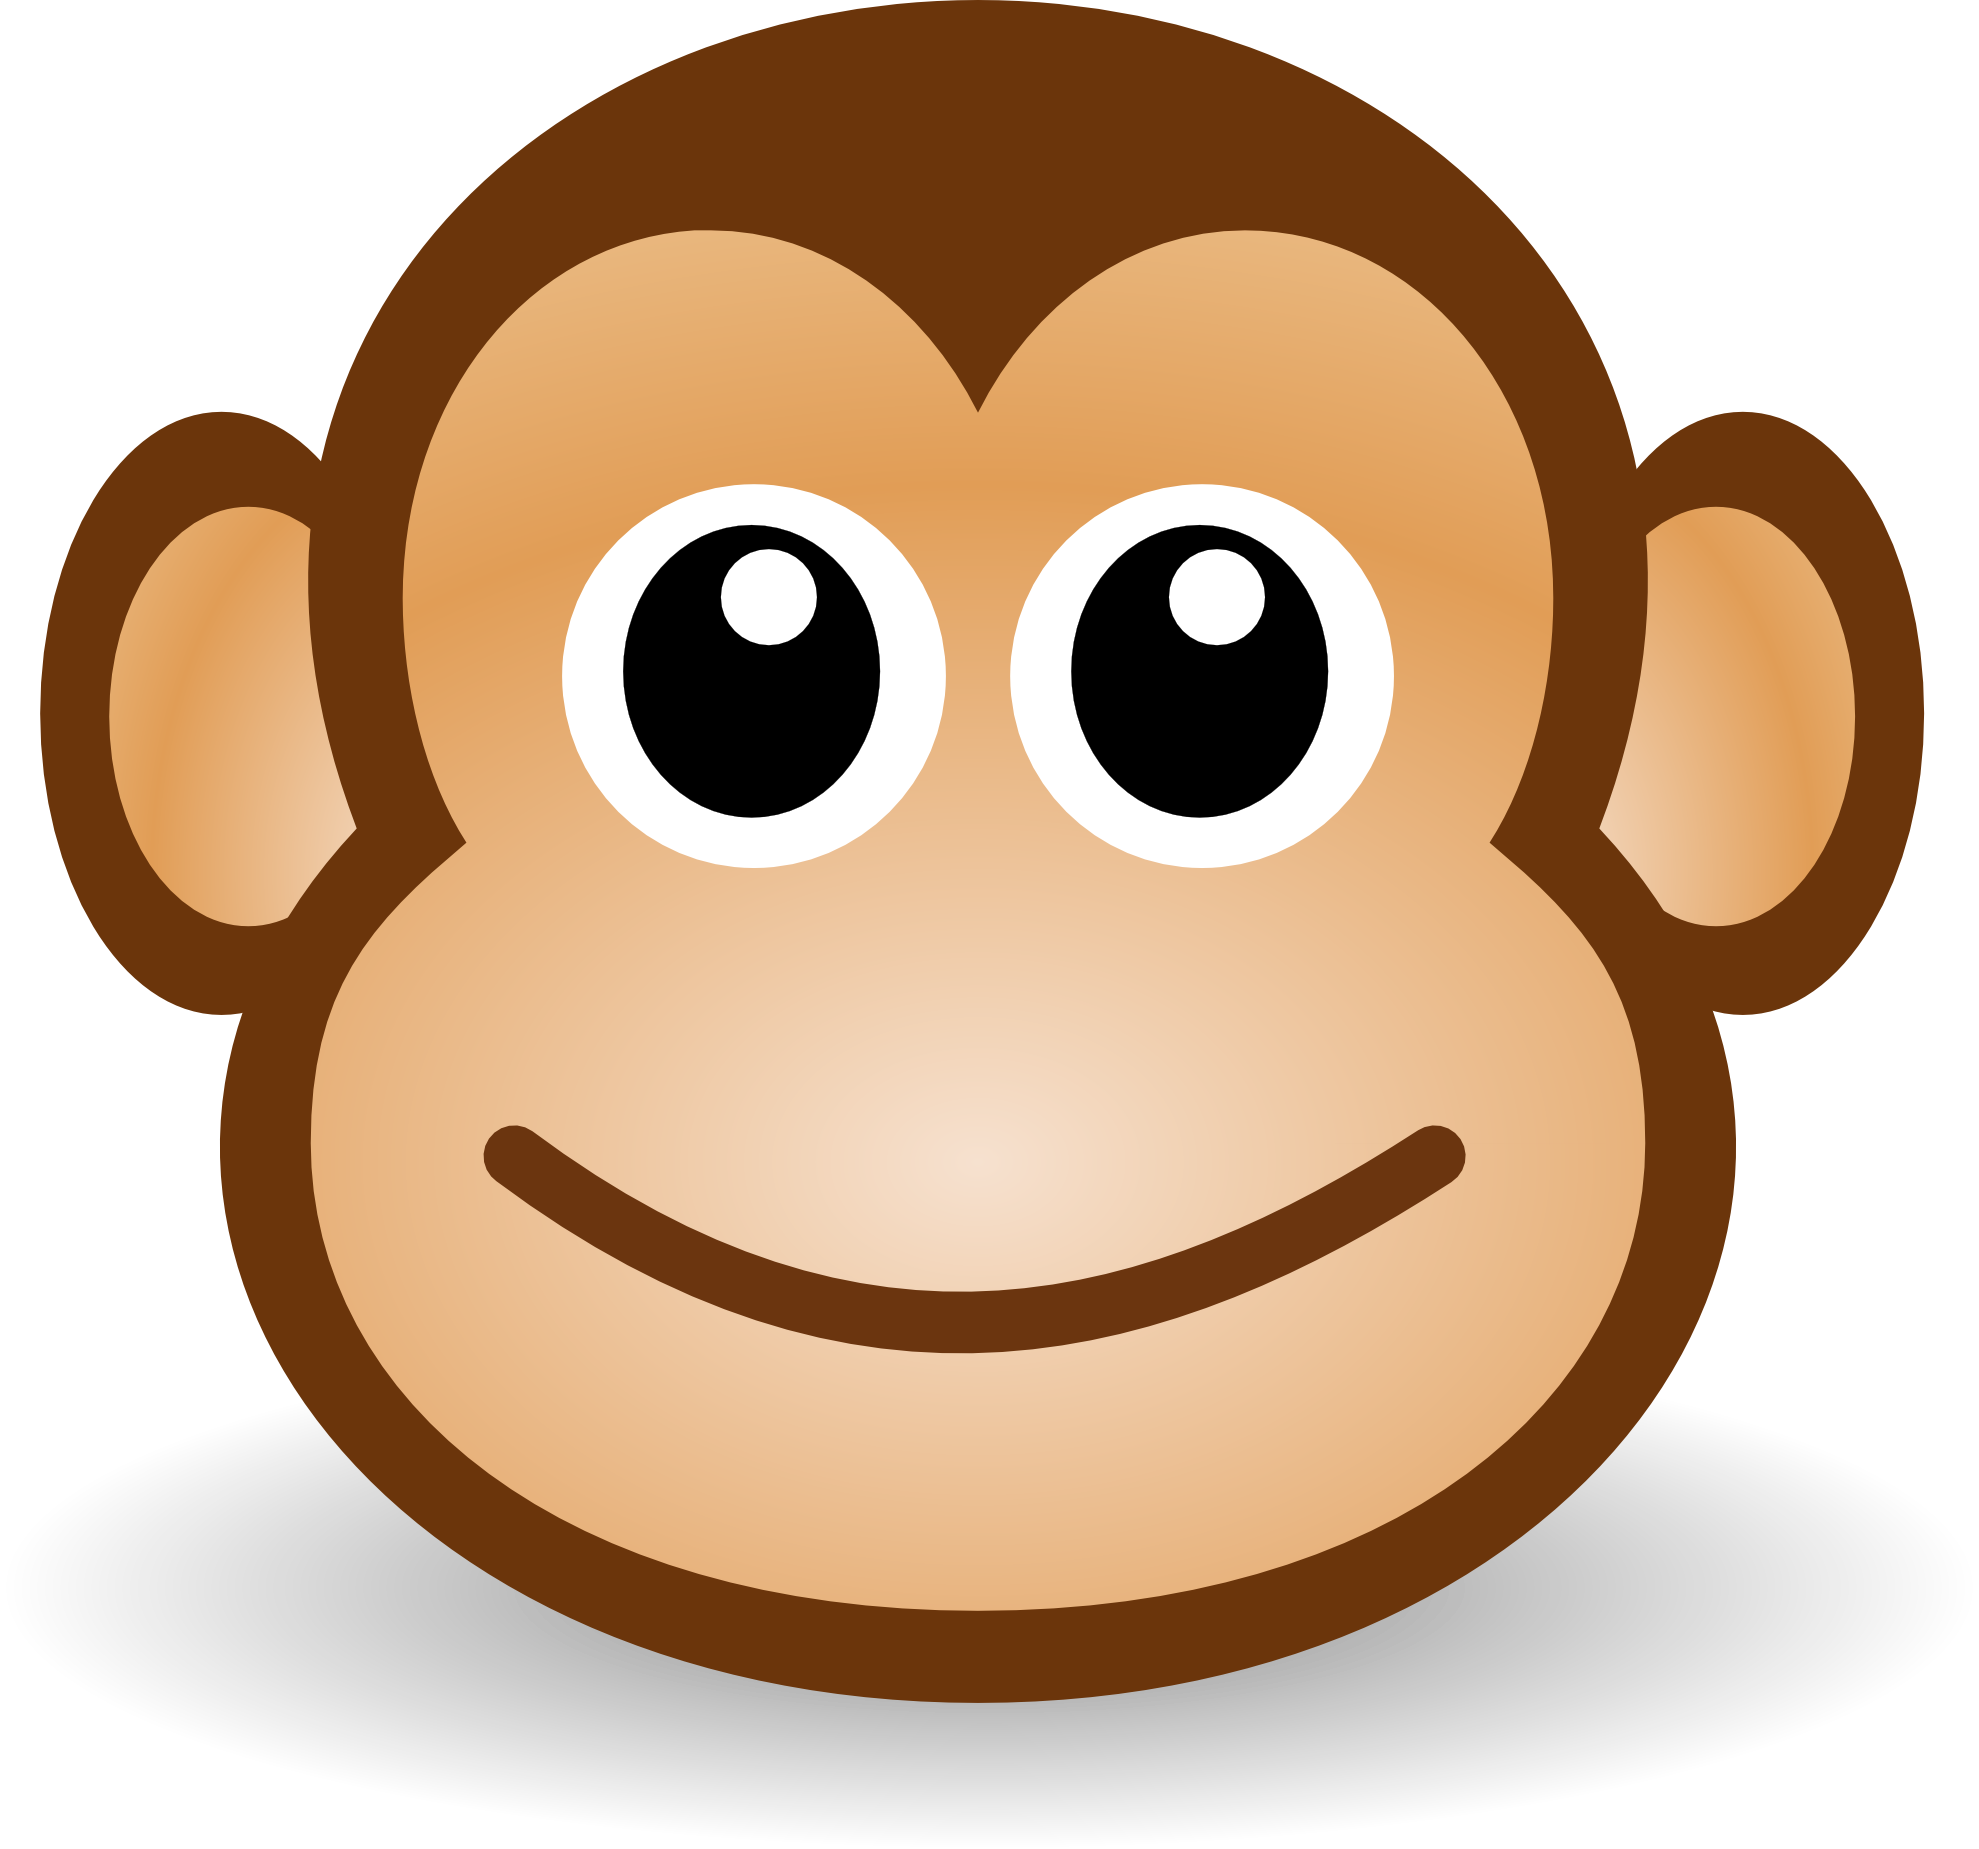 Cartoon Monkey Faces - ClipArt Best